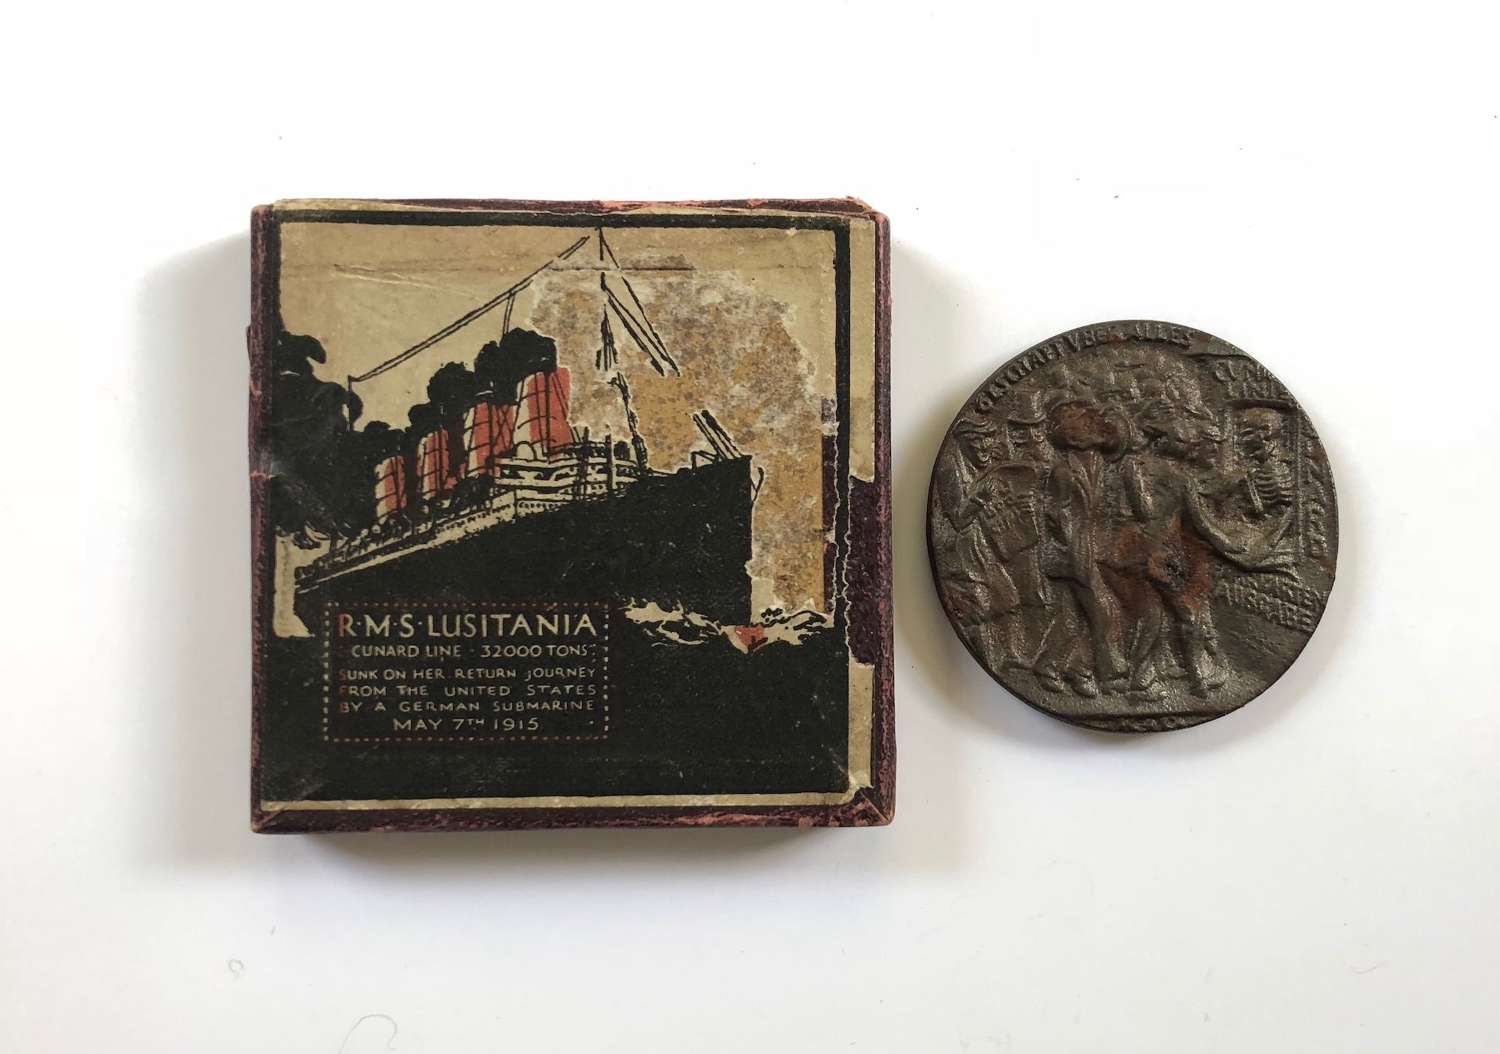 WW1 RMS Lusitania Cunard Shipping Line commemorative medal.